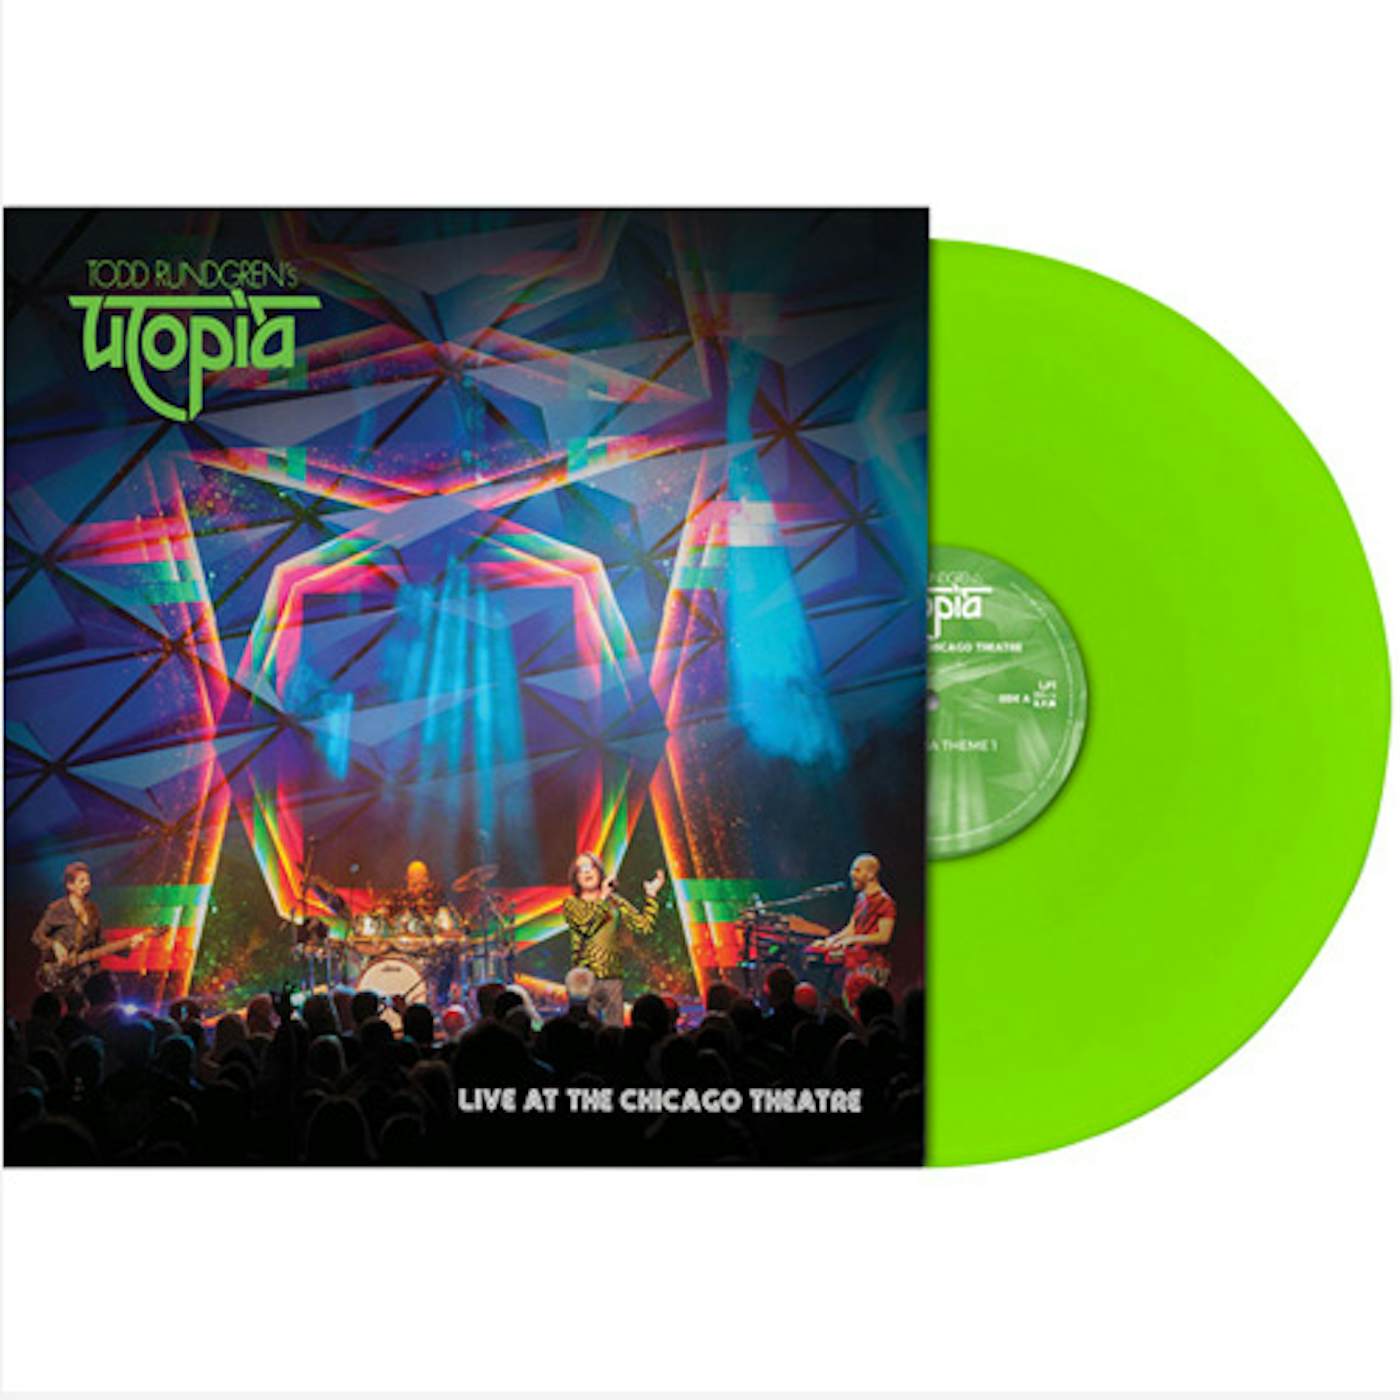 Todd Rundgren's Utopia Live At The Chicago Theatre Vinyl Record